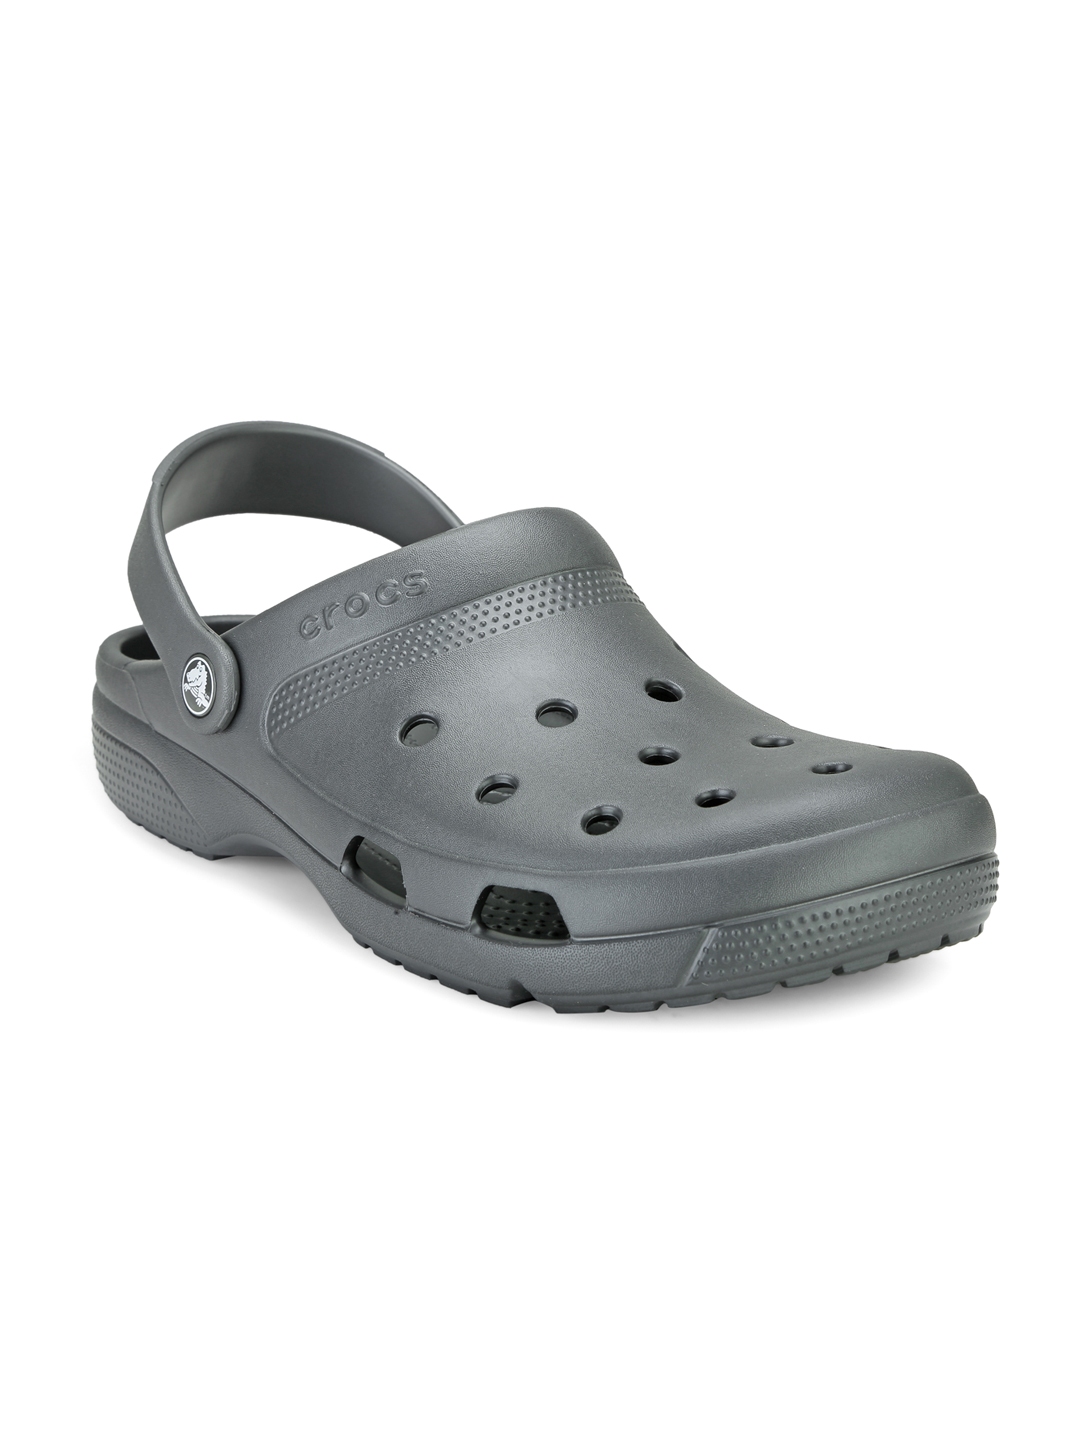 Buy Crocs Men Grey Clogs - Flip Flops 